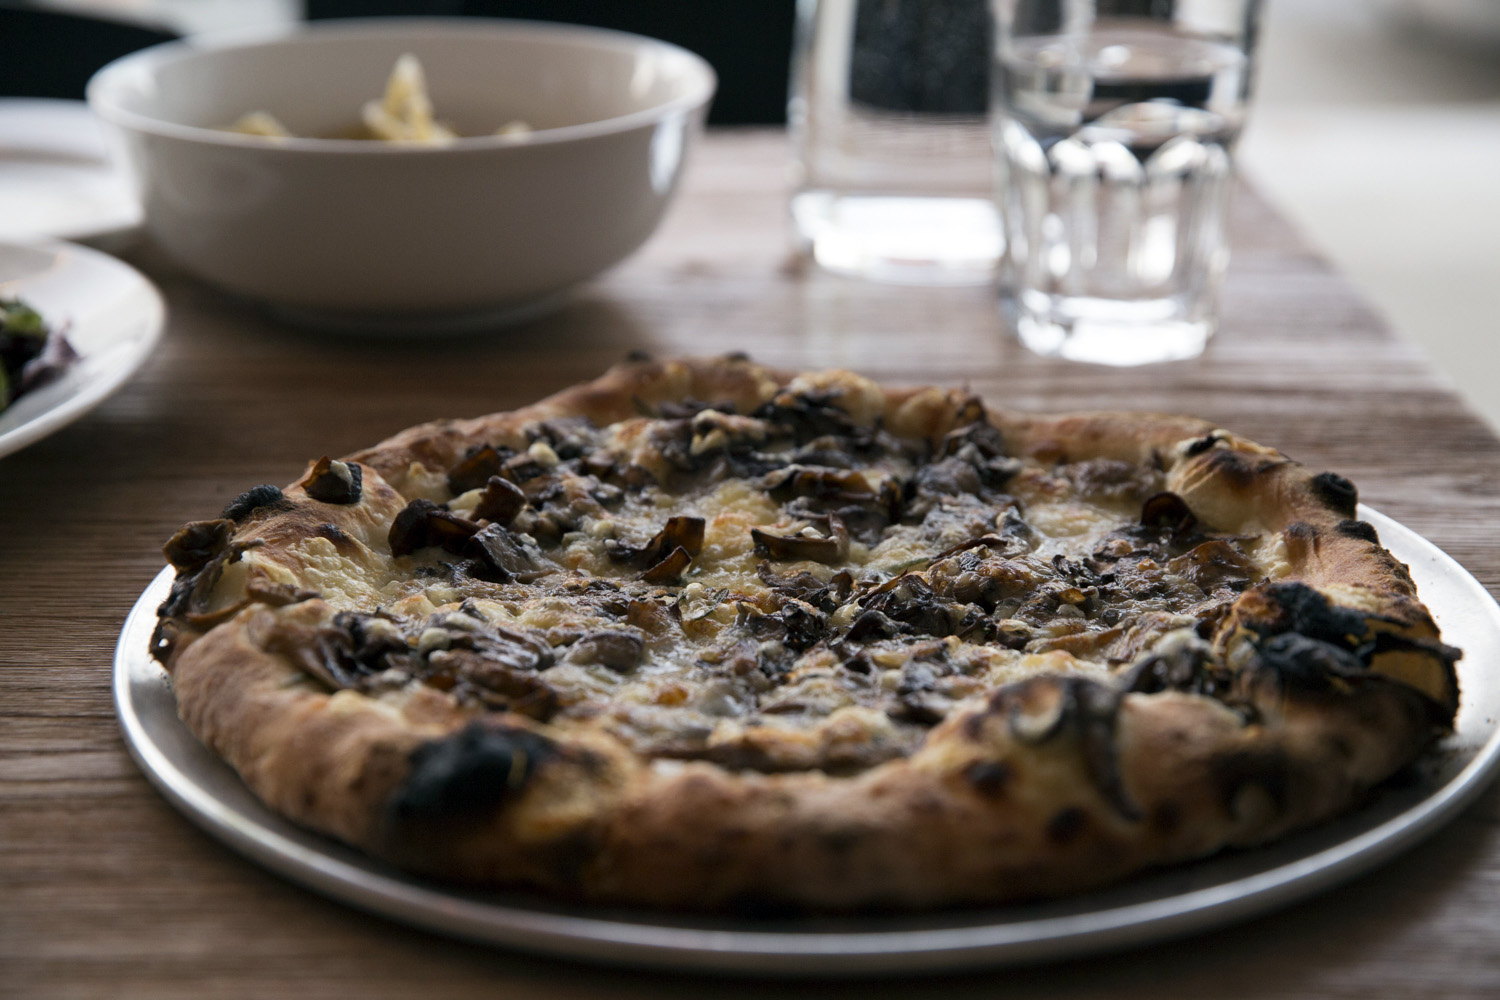 The Alamo Pie pizza at Fiorella (Mushroom, rosemary, cream, garlic and fontina)